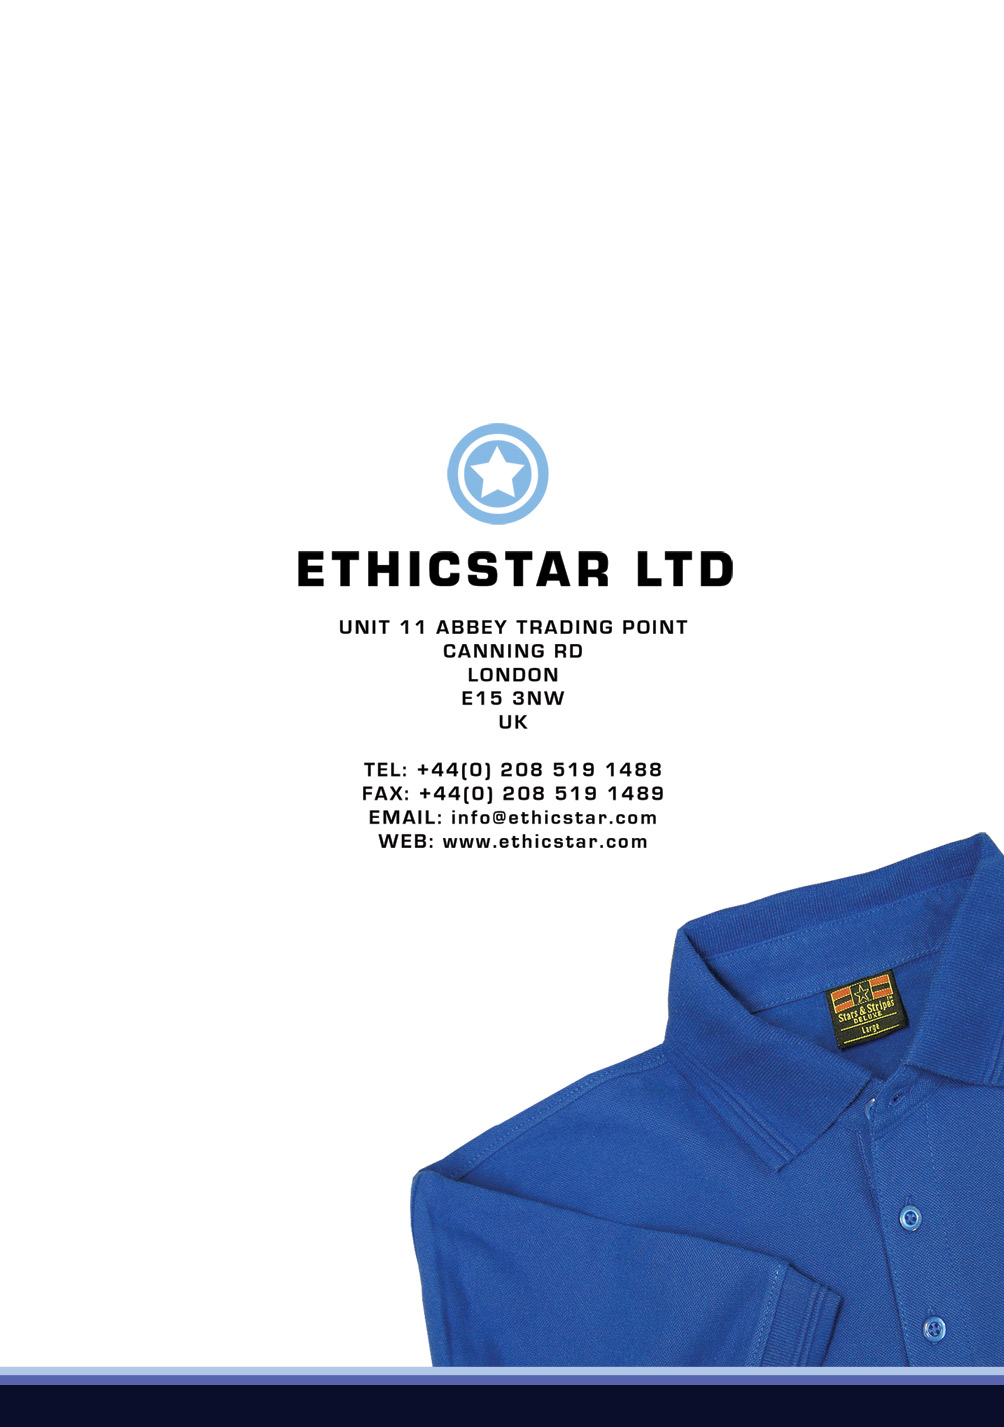 EthicStar Ltd